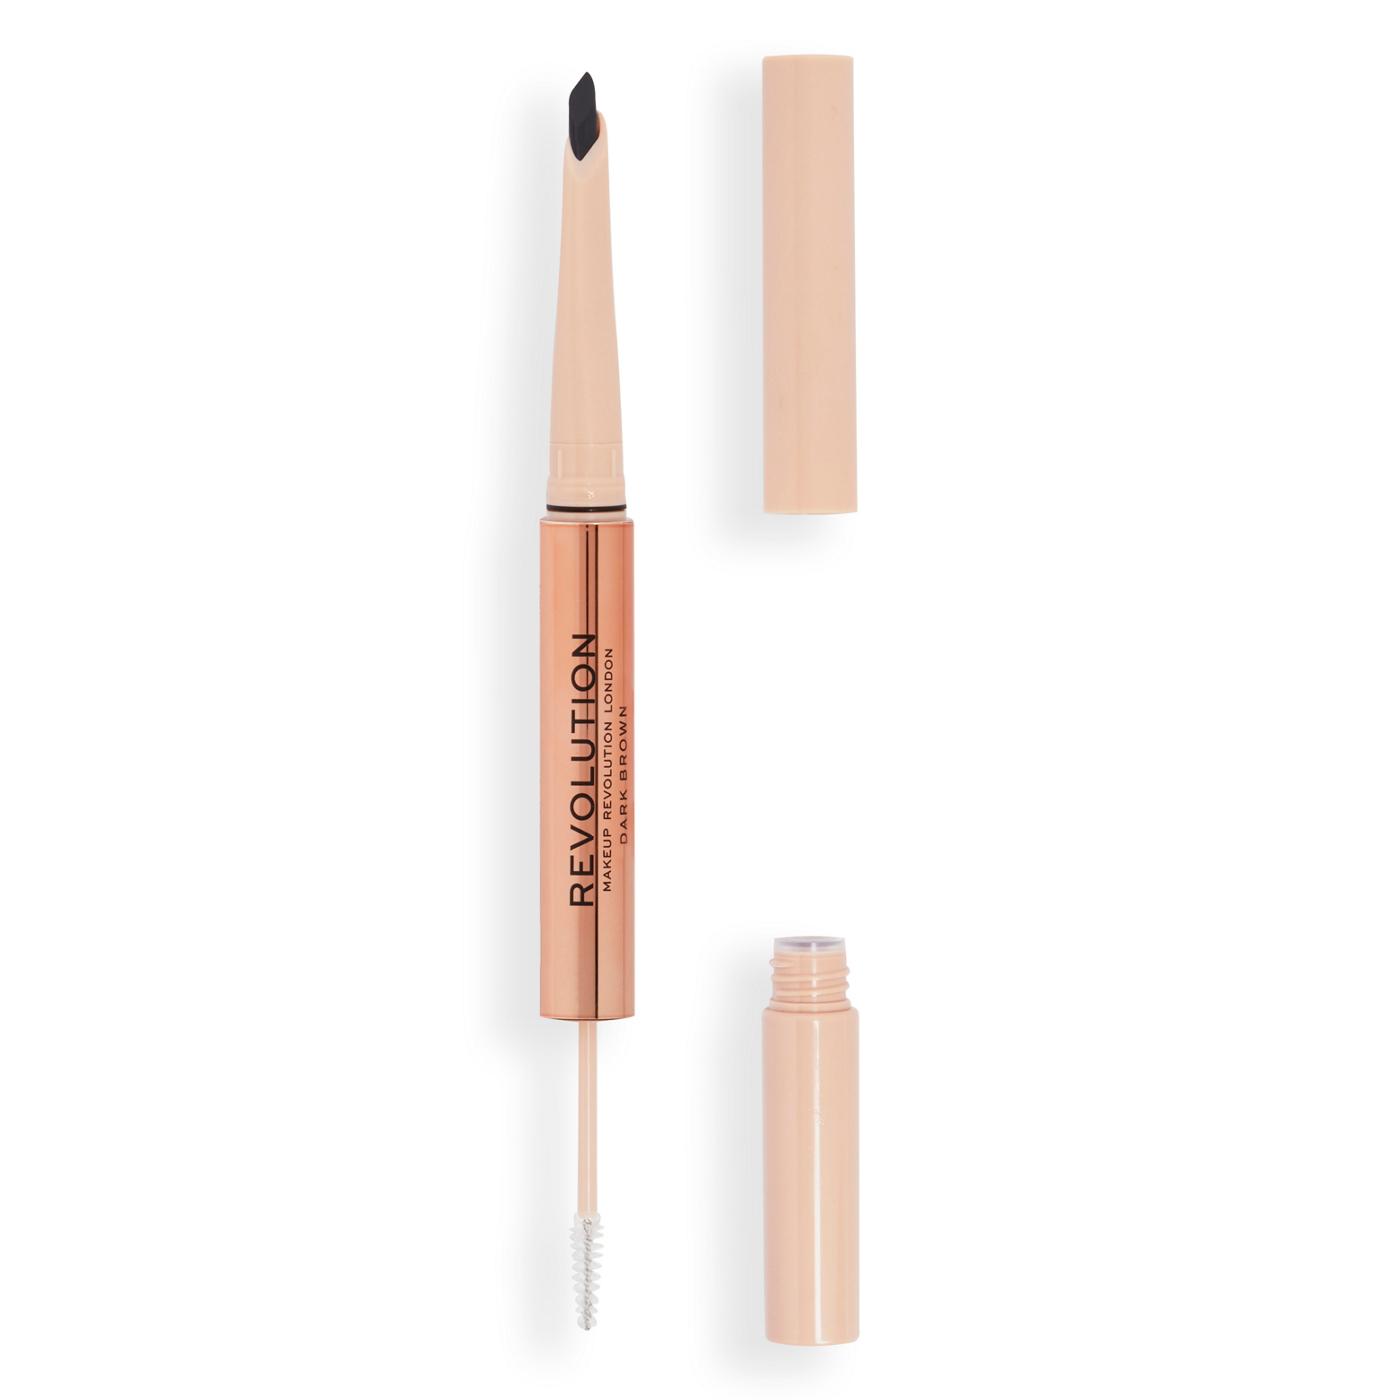 Makeup Revolution Fluffy Brow Duo Pencil - Dark Brown; image 2 of 4